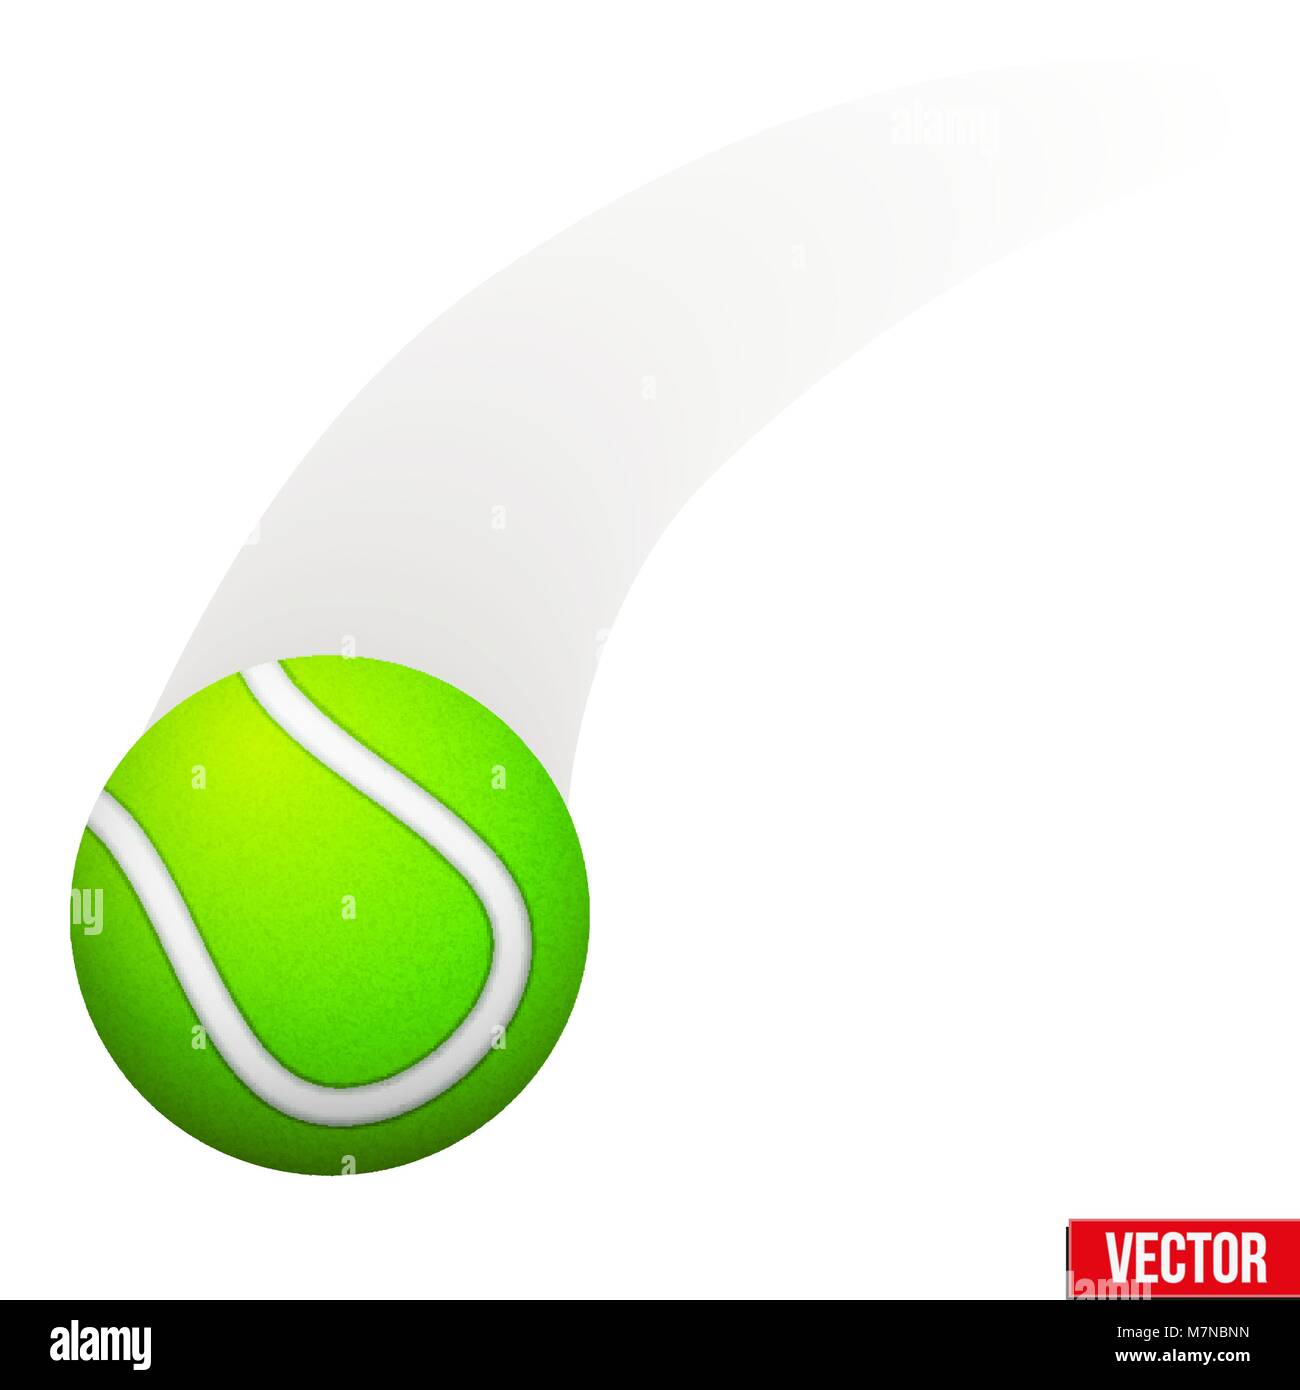 Vector illustration of moving tennis ball Stock Vector